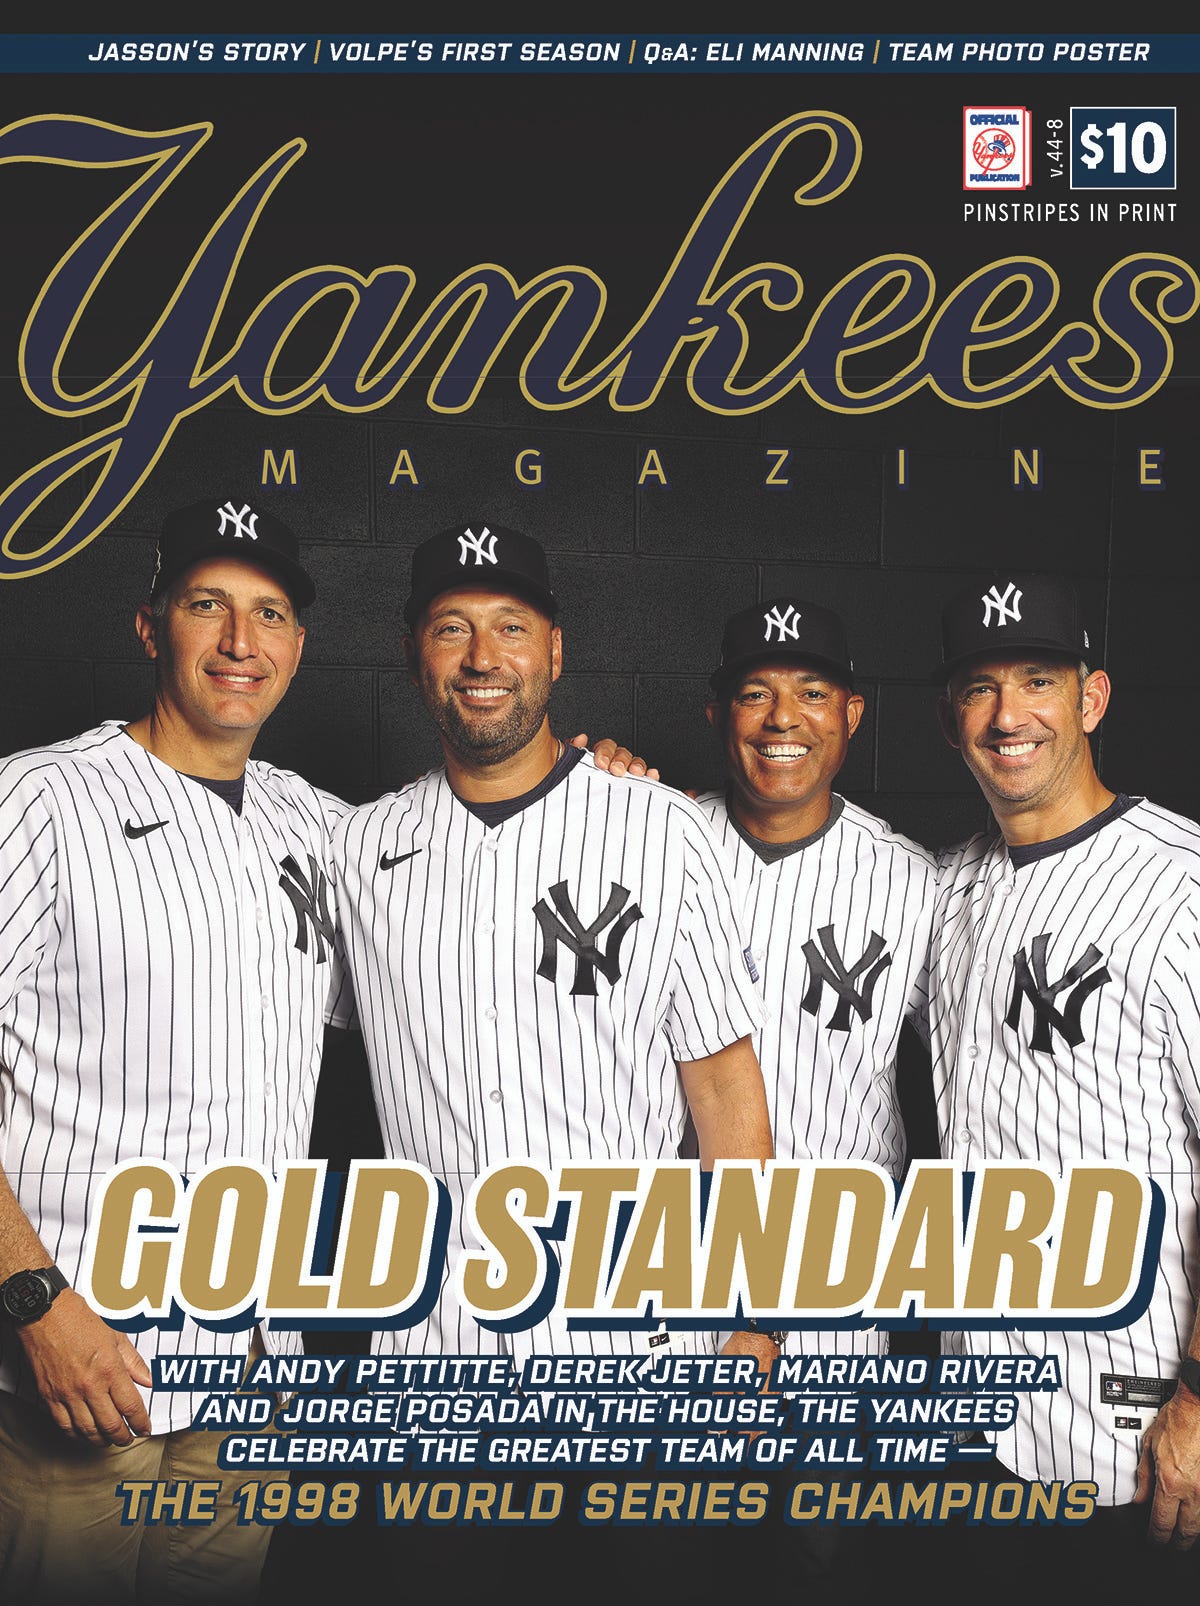 Derek Jeter on Cover New York Yankees 2014 Yearbook Official Yearbook